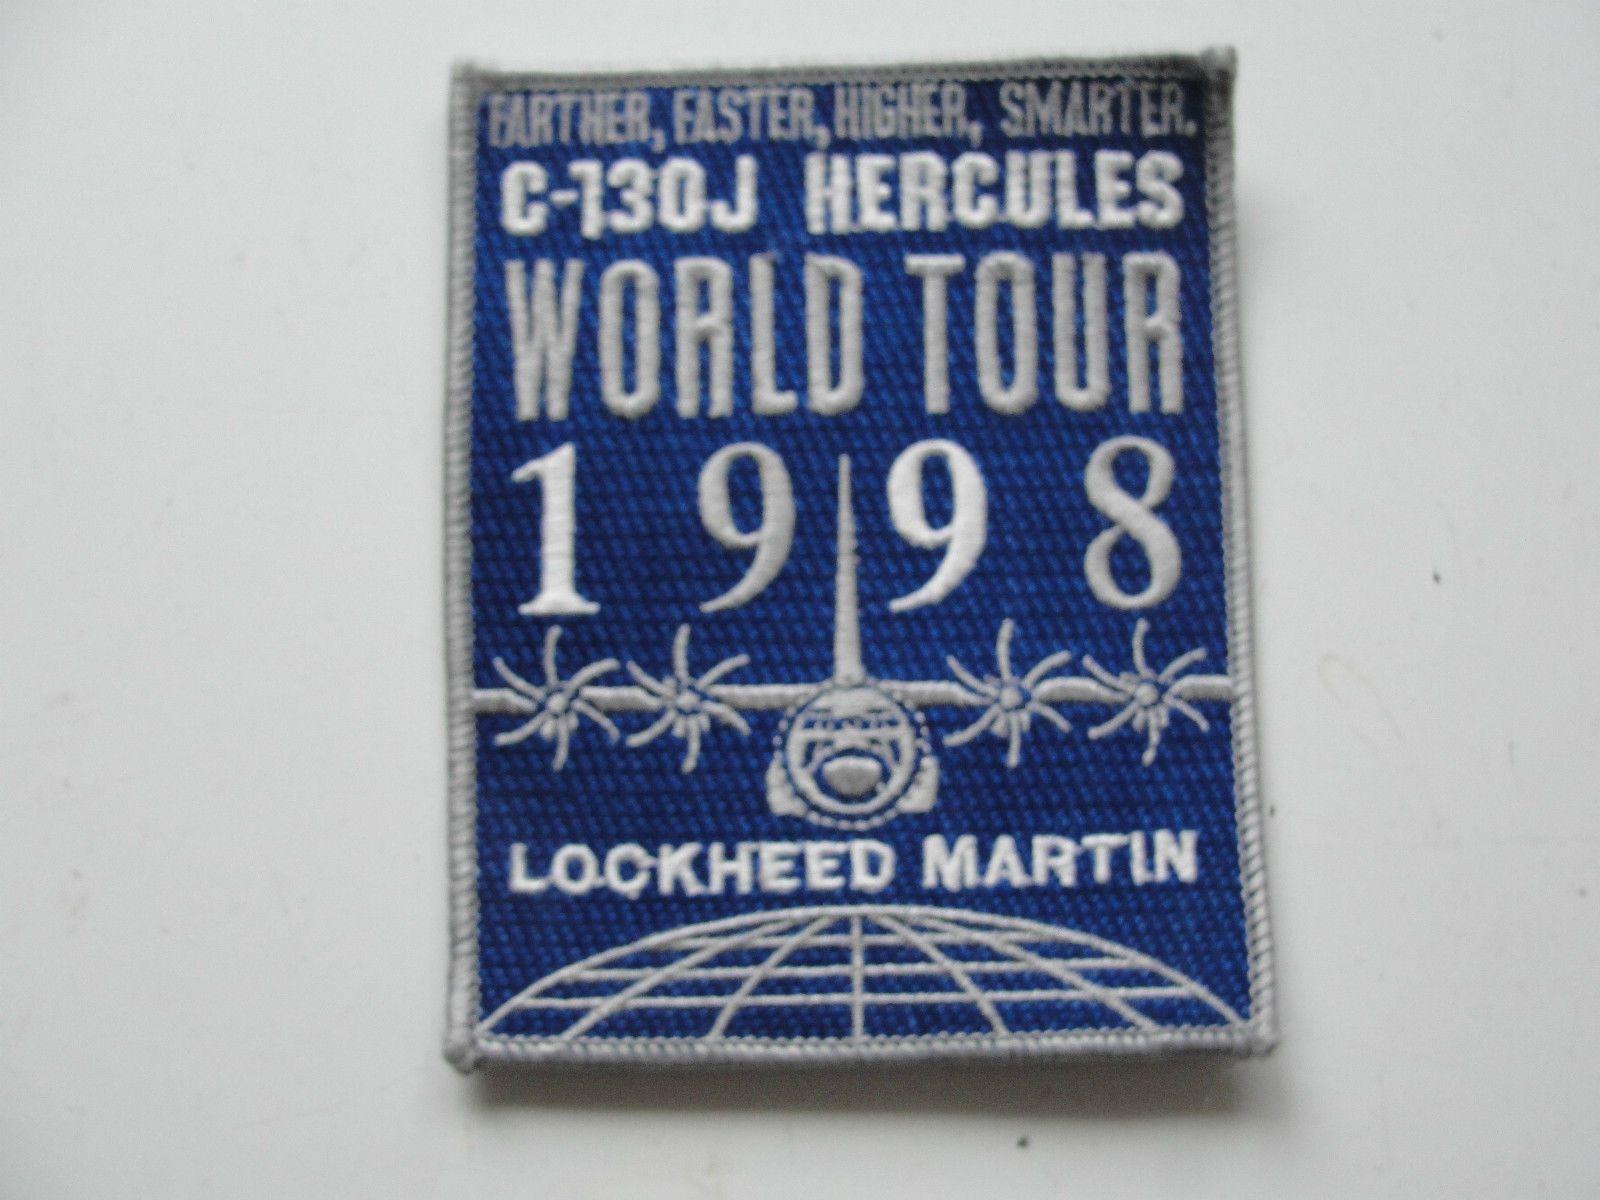 Old Lockheed Logo - C 130J HERCULES WORLD TOUR 1998 LOCKHEED MARTIN, ORIGINAL COLLECTIBLE